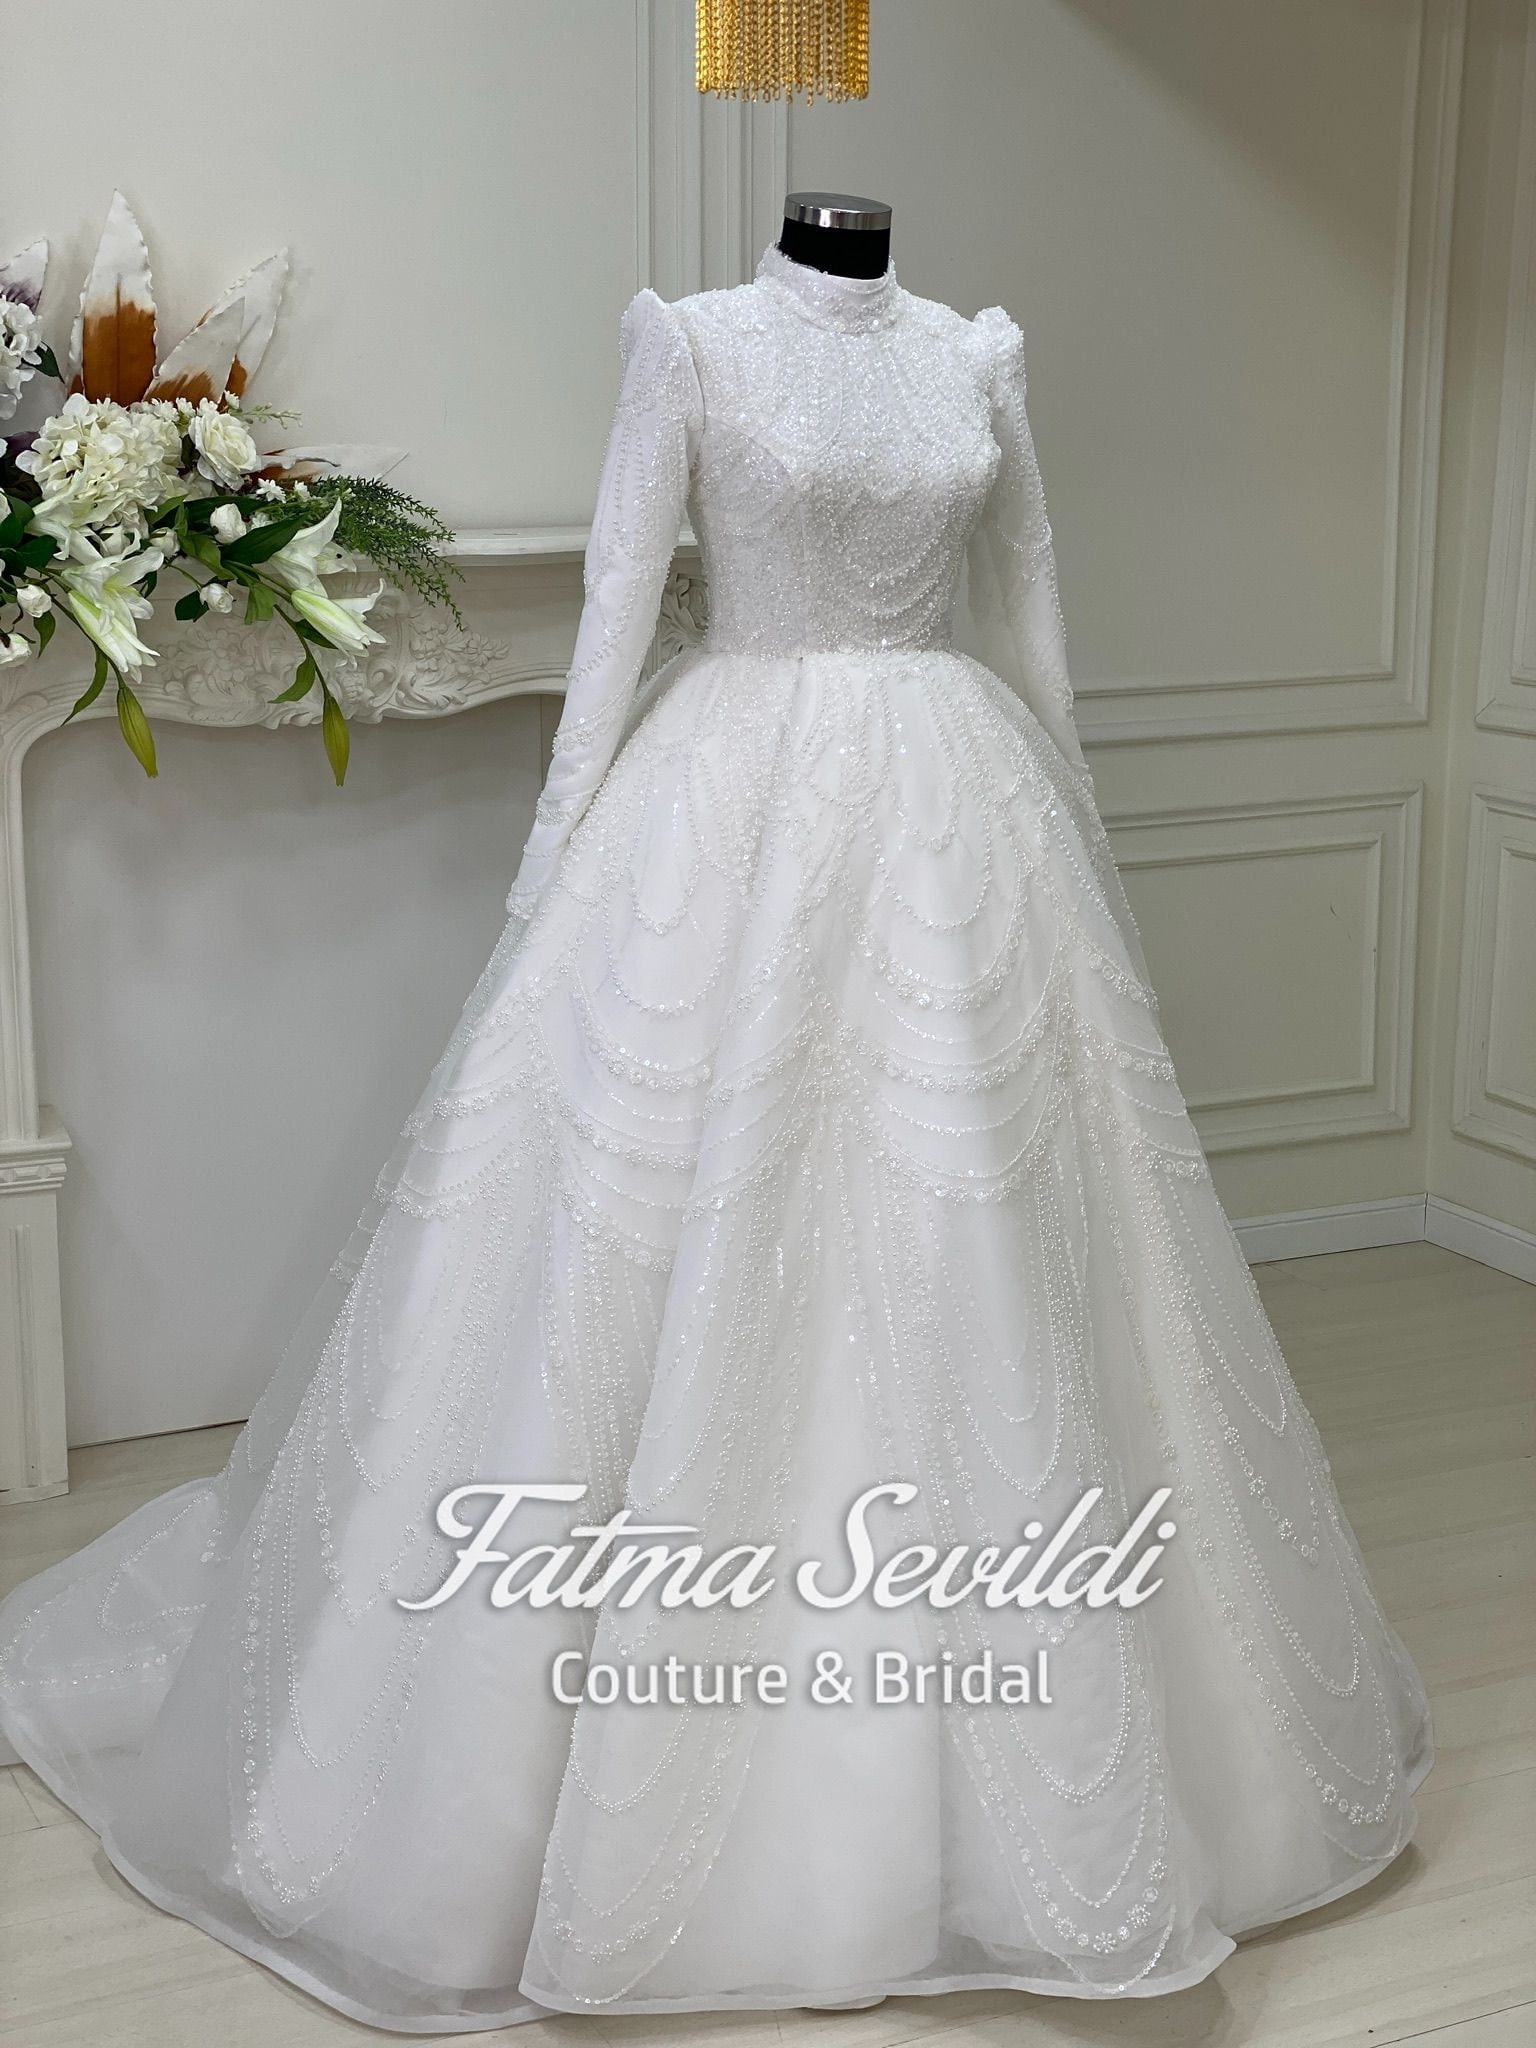 Full Bouffant Slip Petticoat Crinoline Sale - Your Dream Dress ❤️